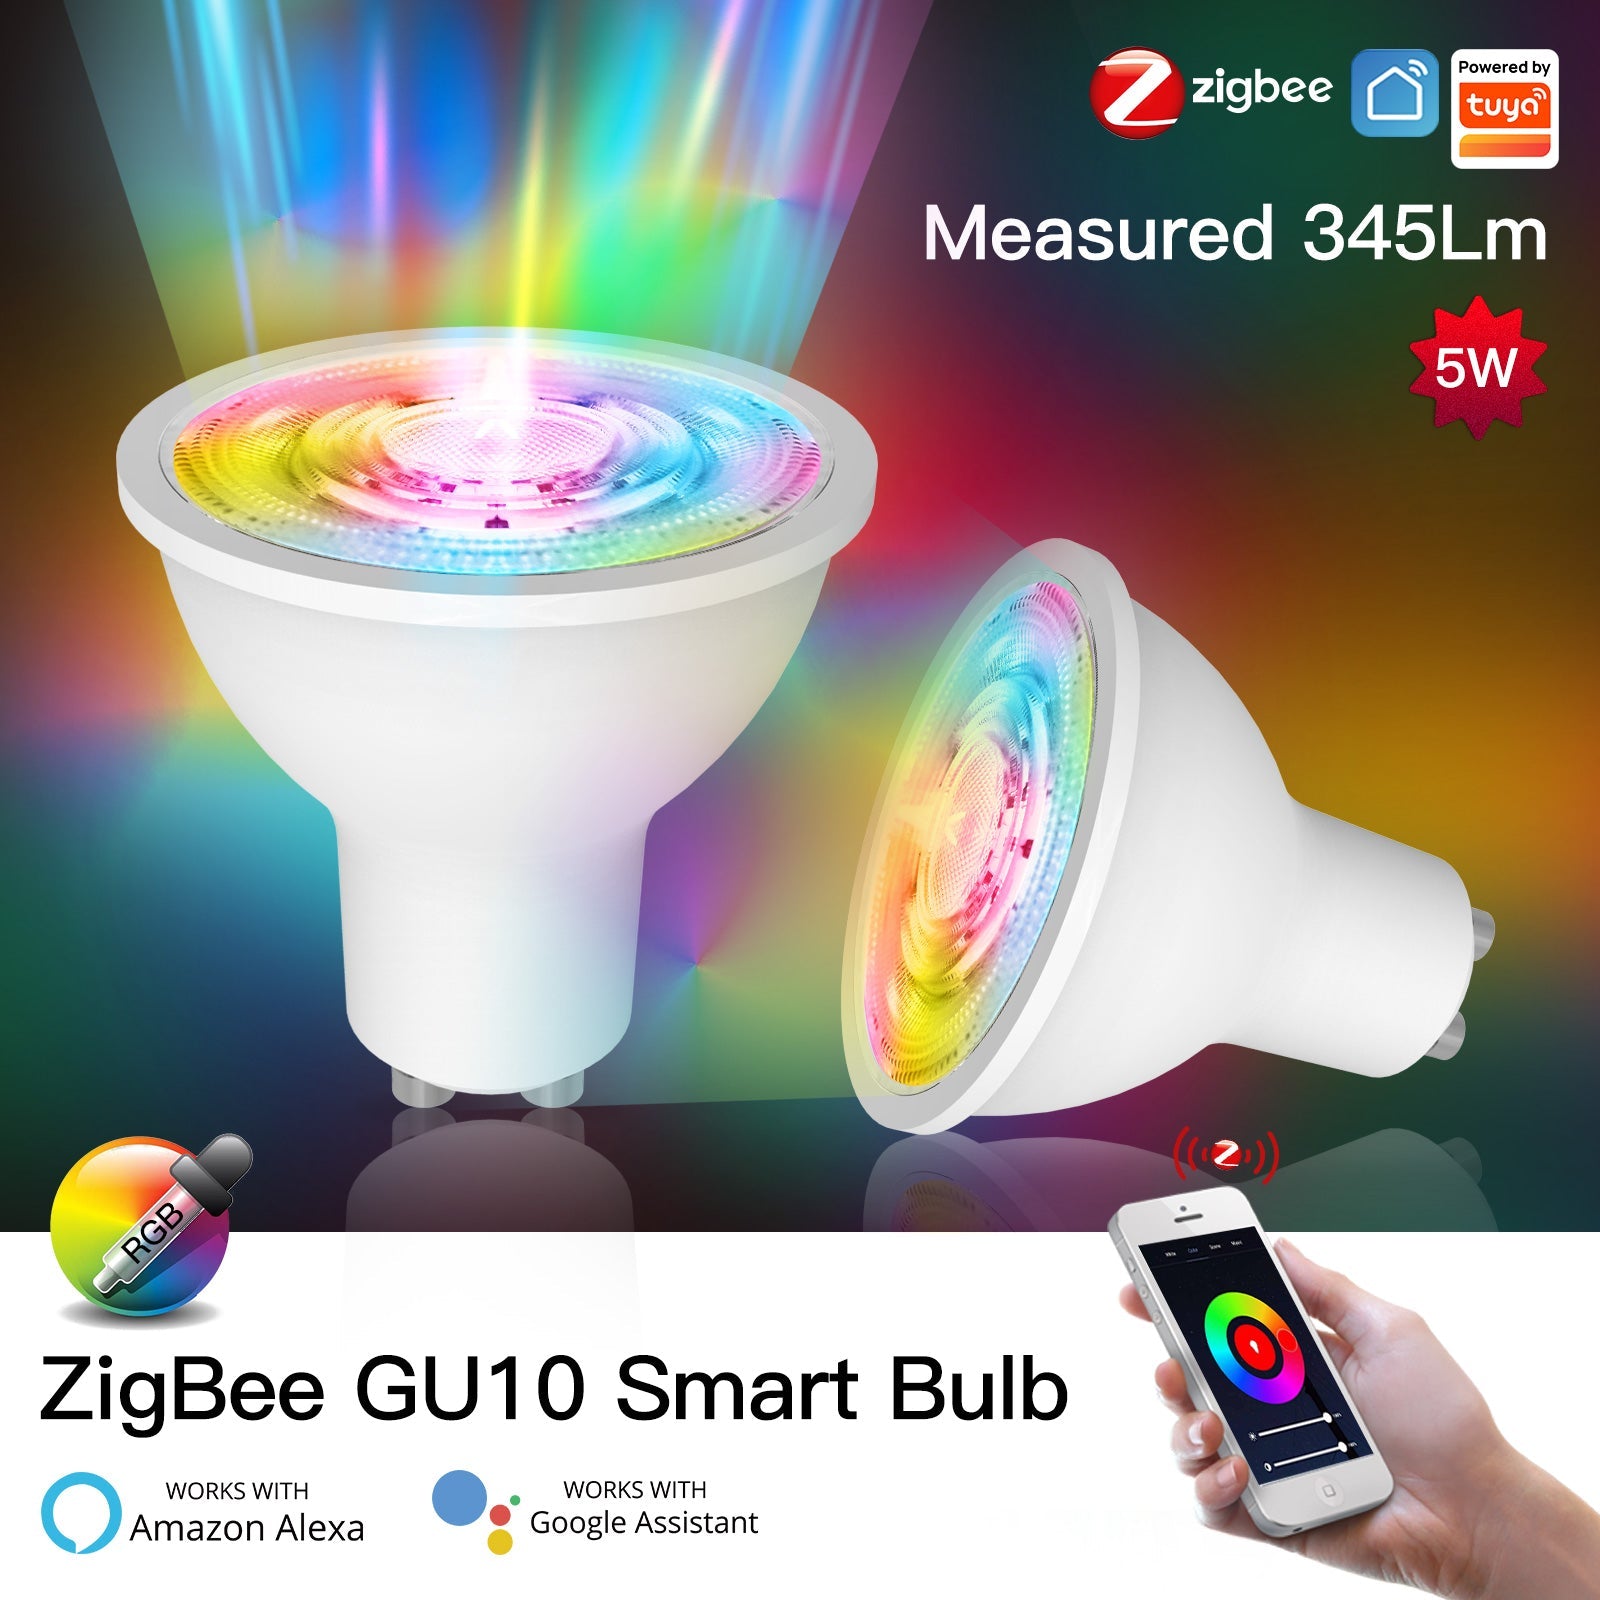 ZigBee GU10 Smart Bulb measured 345Lm - MOES